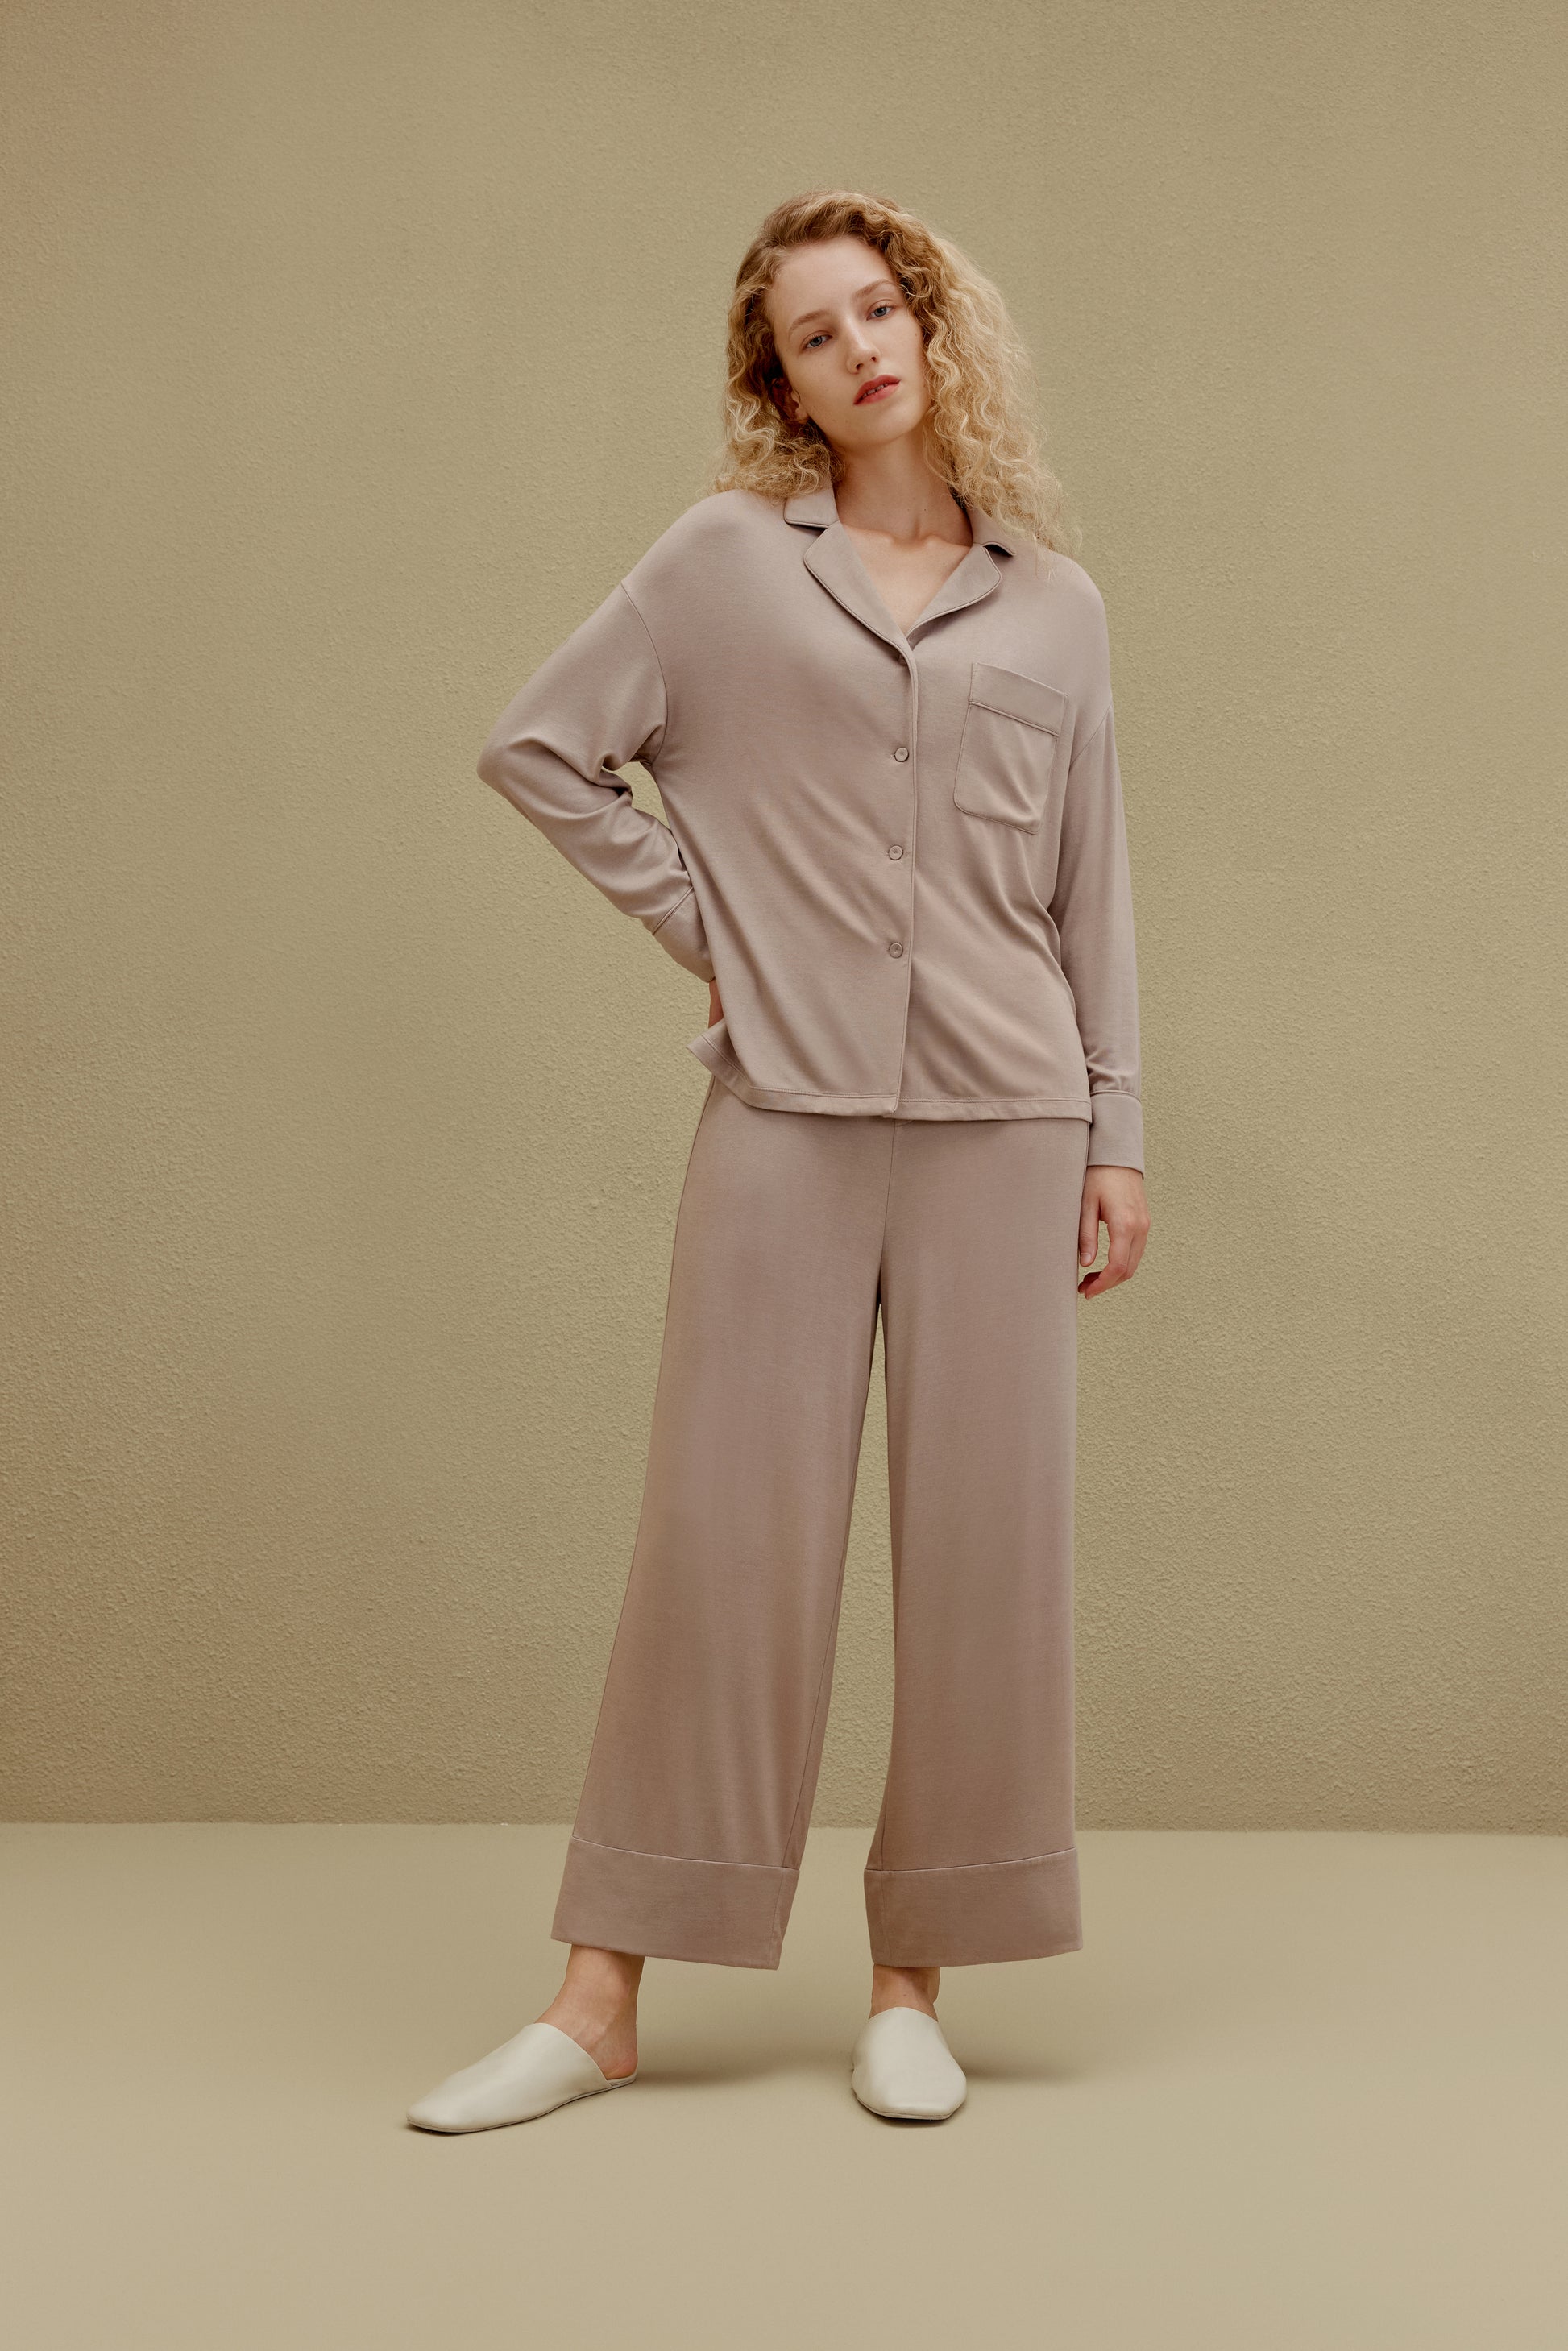 Buy Pyjama Bottom for Women, Ladies Soft Pajama Bottoms Pure Color